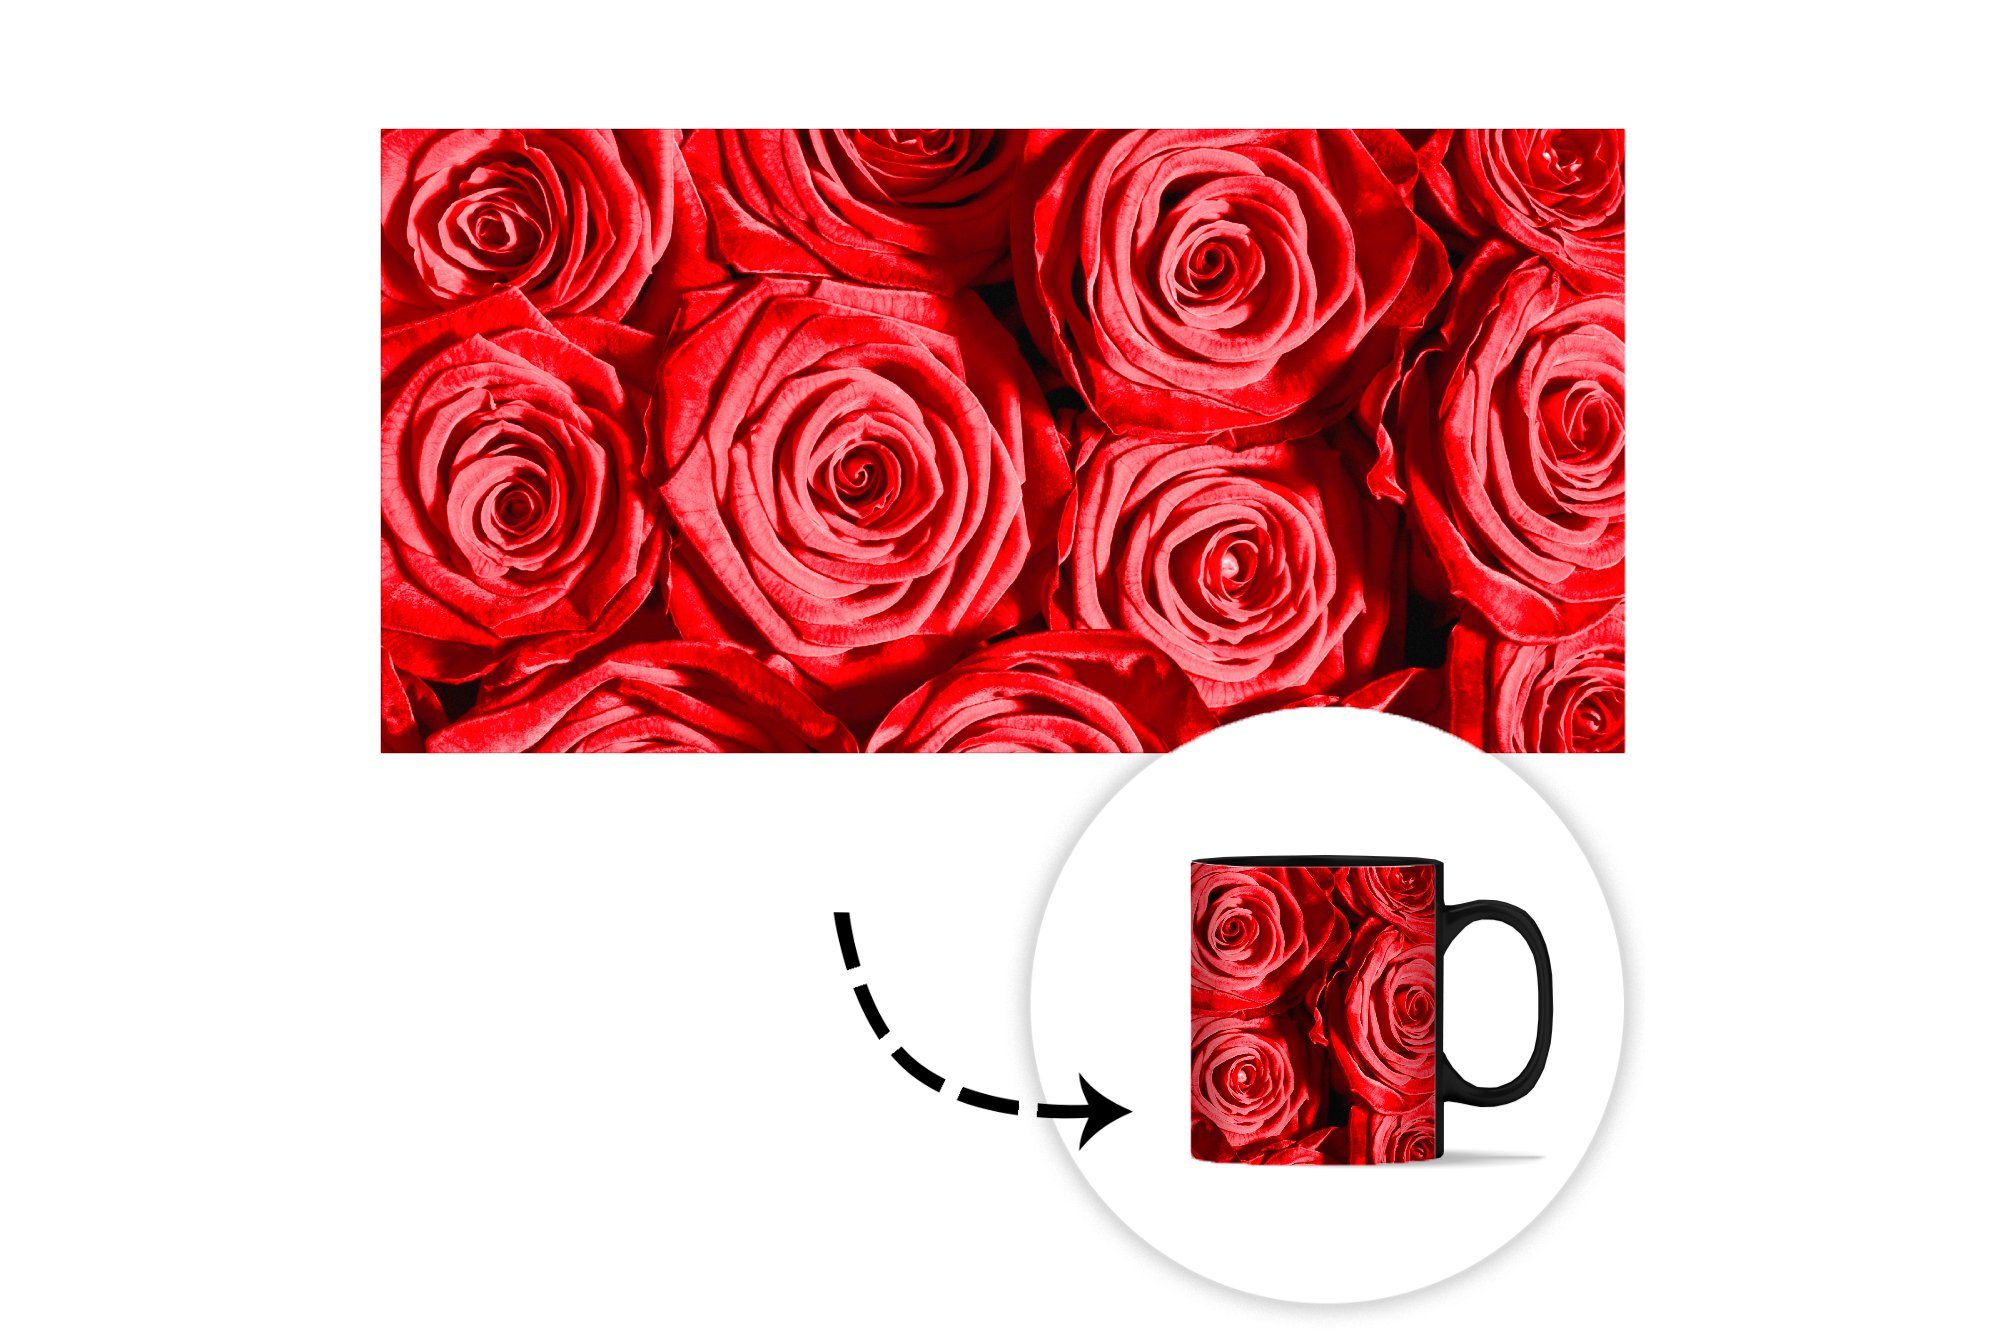 MuchoWow Tasse Teetasse, Geschenk - - Rose Farbwechsel, Rot, Zaubertasse, Rosen Keramik, Kaffeetassen